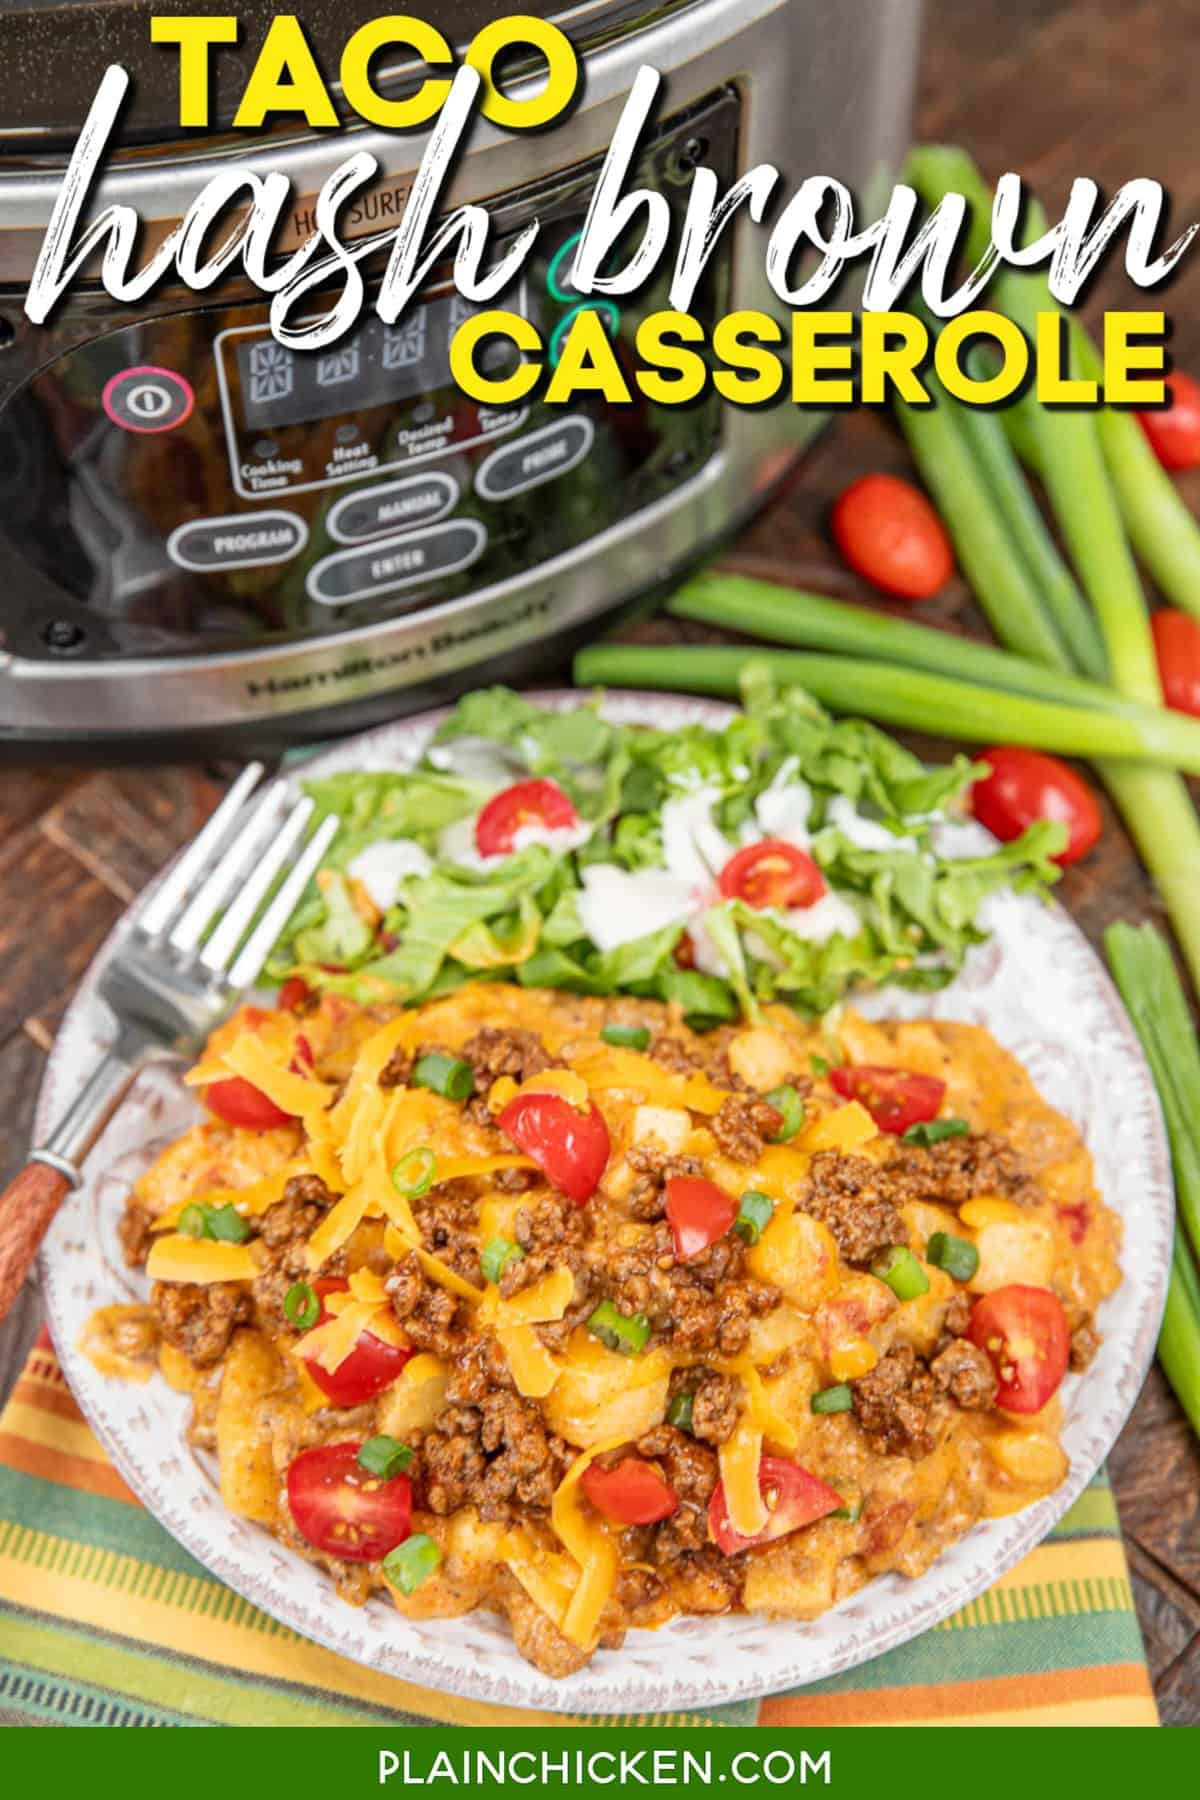 Taco Crock Pot Hashbrown Casserole - Recipes That Crock!